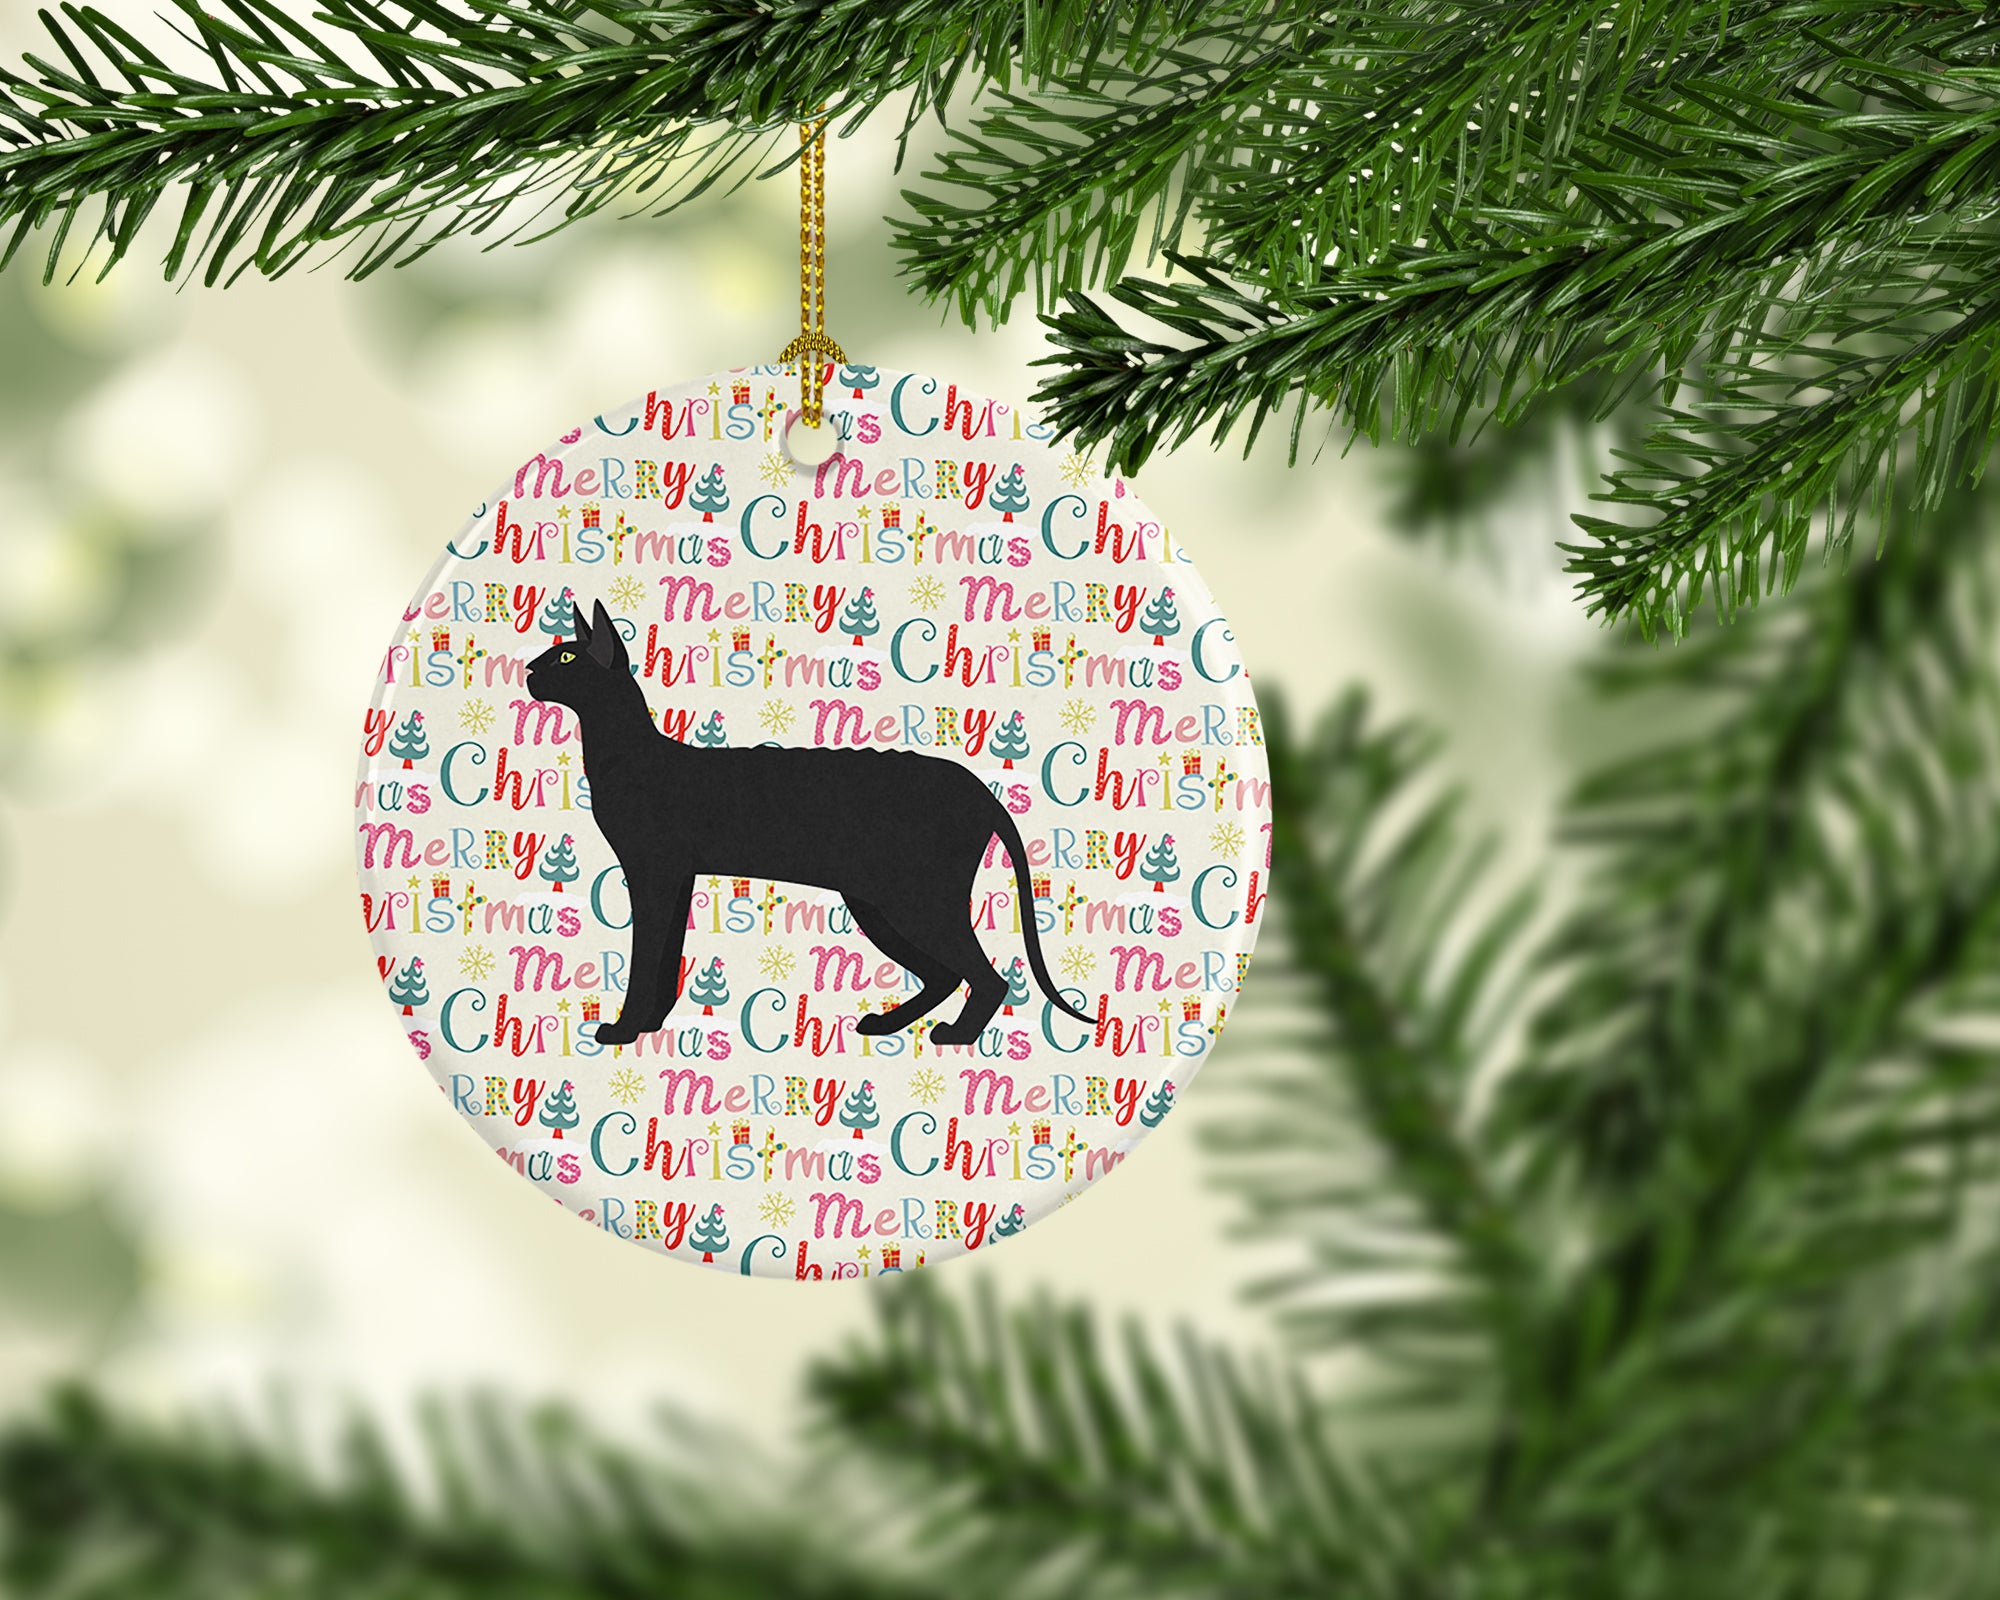 Buy this Black Cornish Rex Cat Christmas Ceramic Ornament